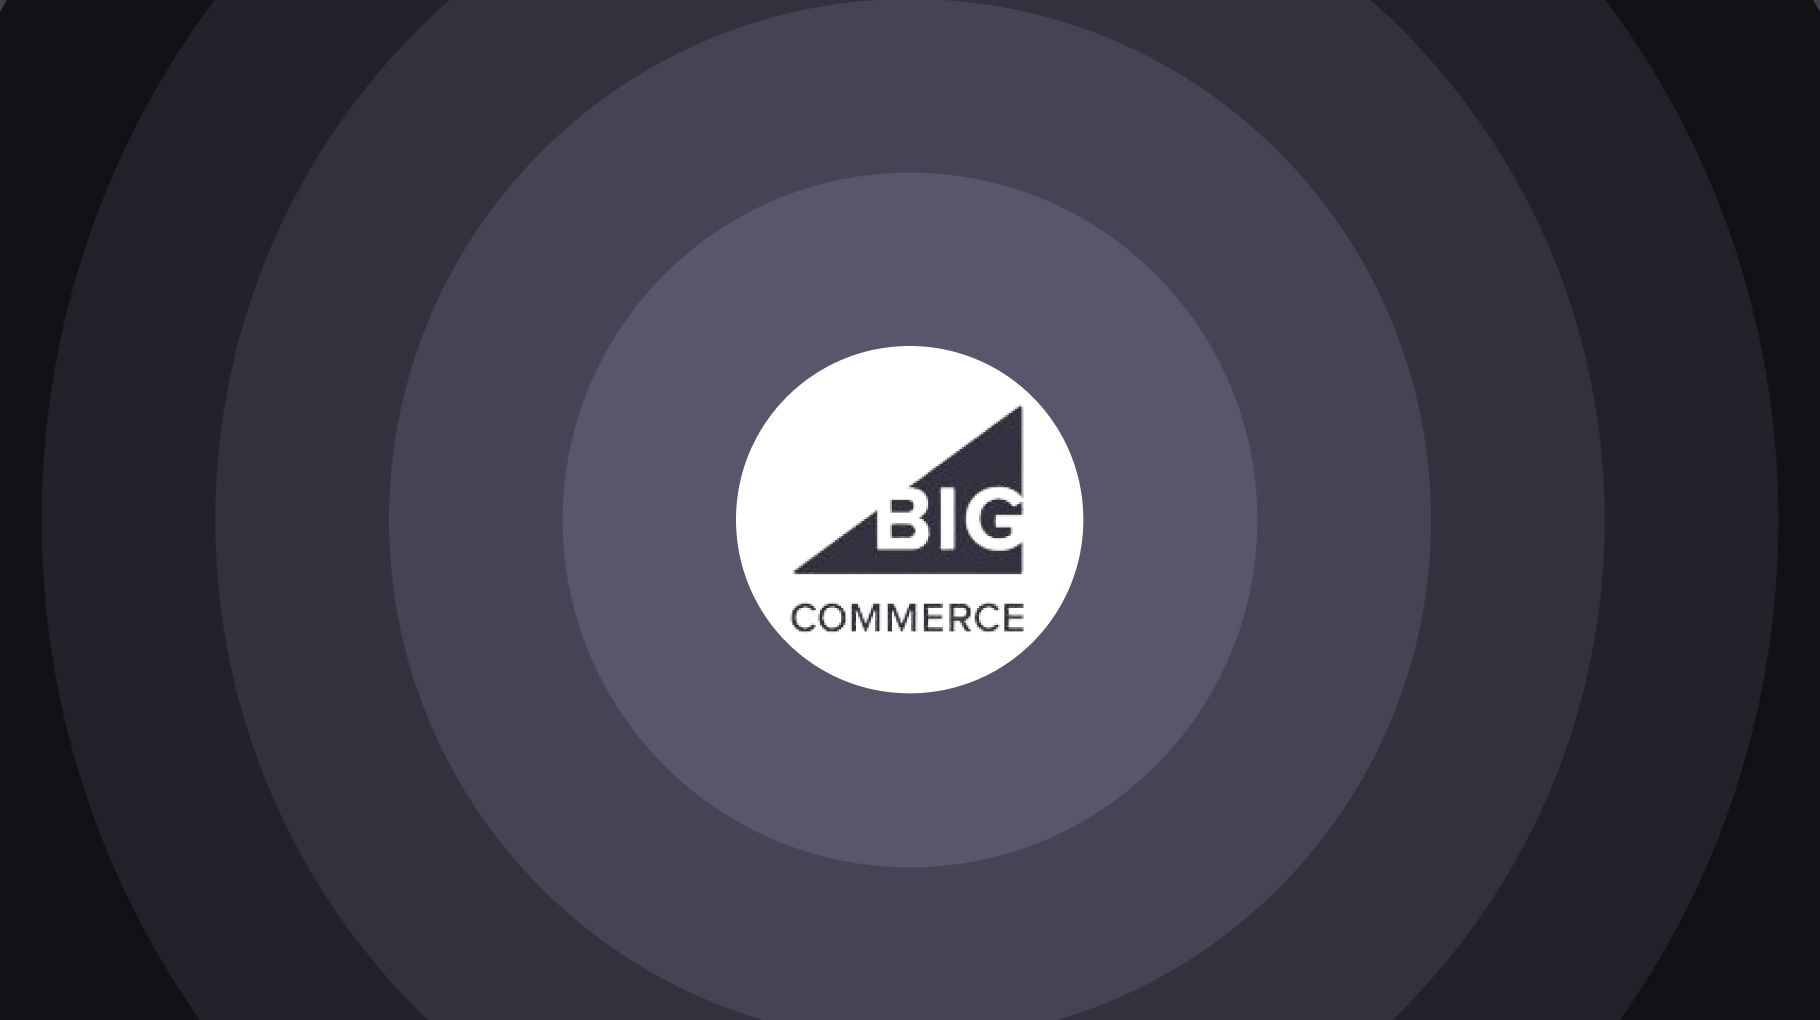 BigCommerce growth and statistics